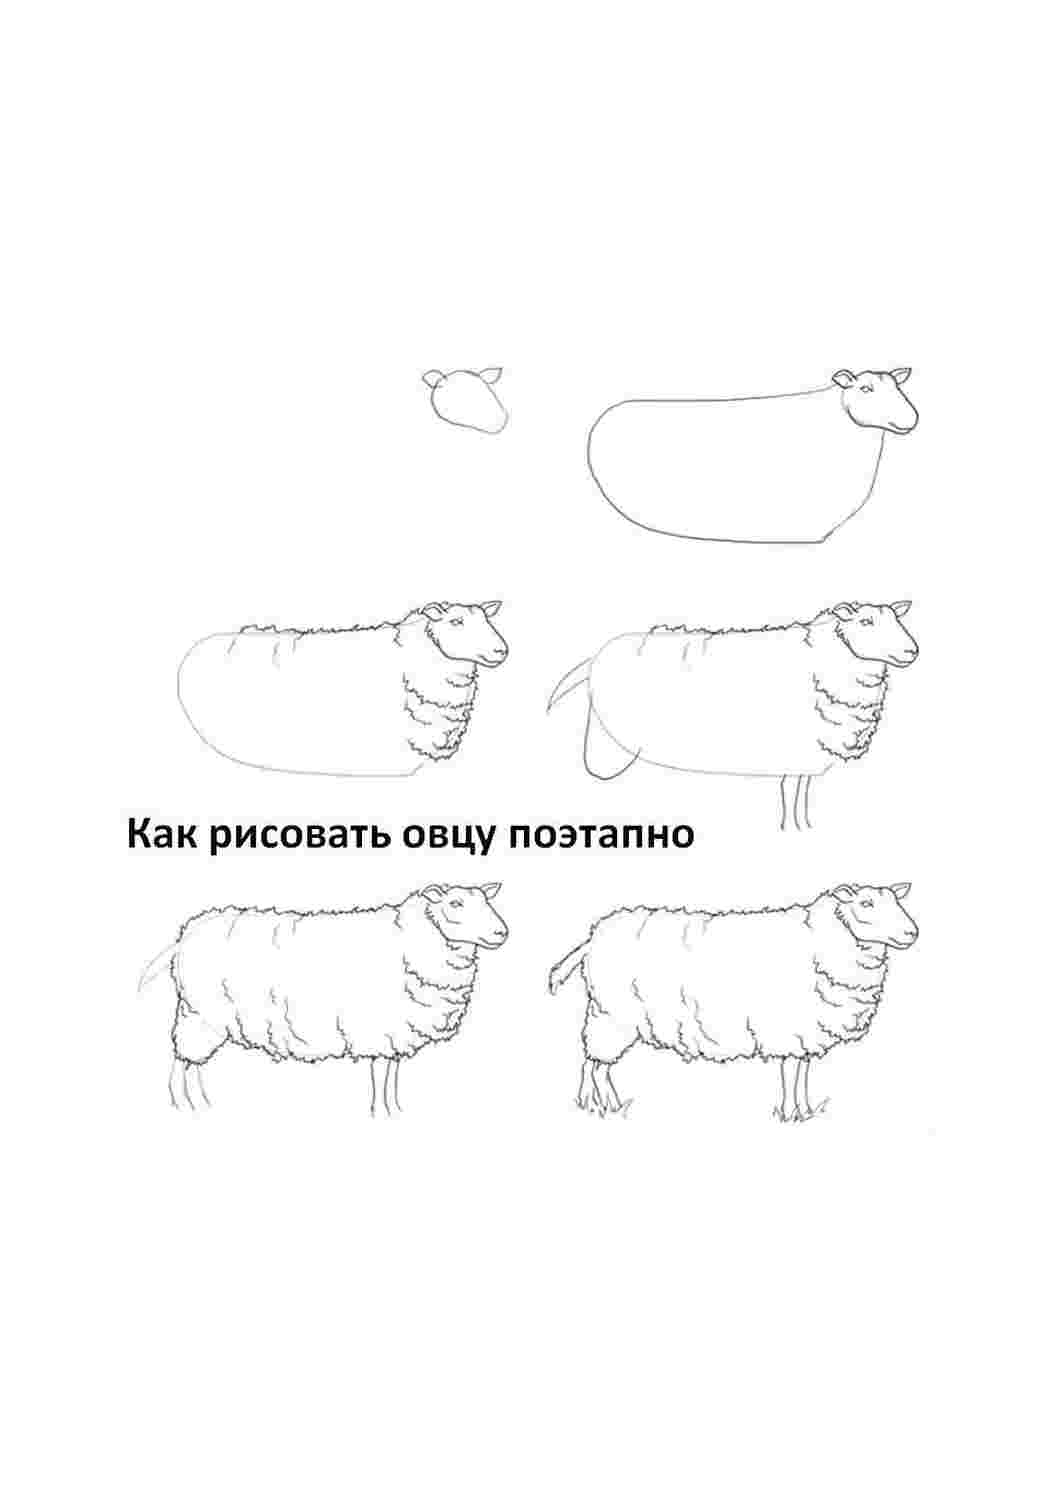 Как нарисовать овцу карандашом поэтапно